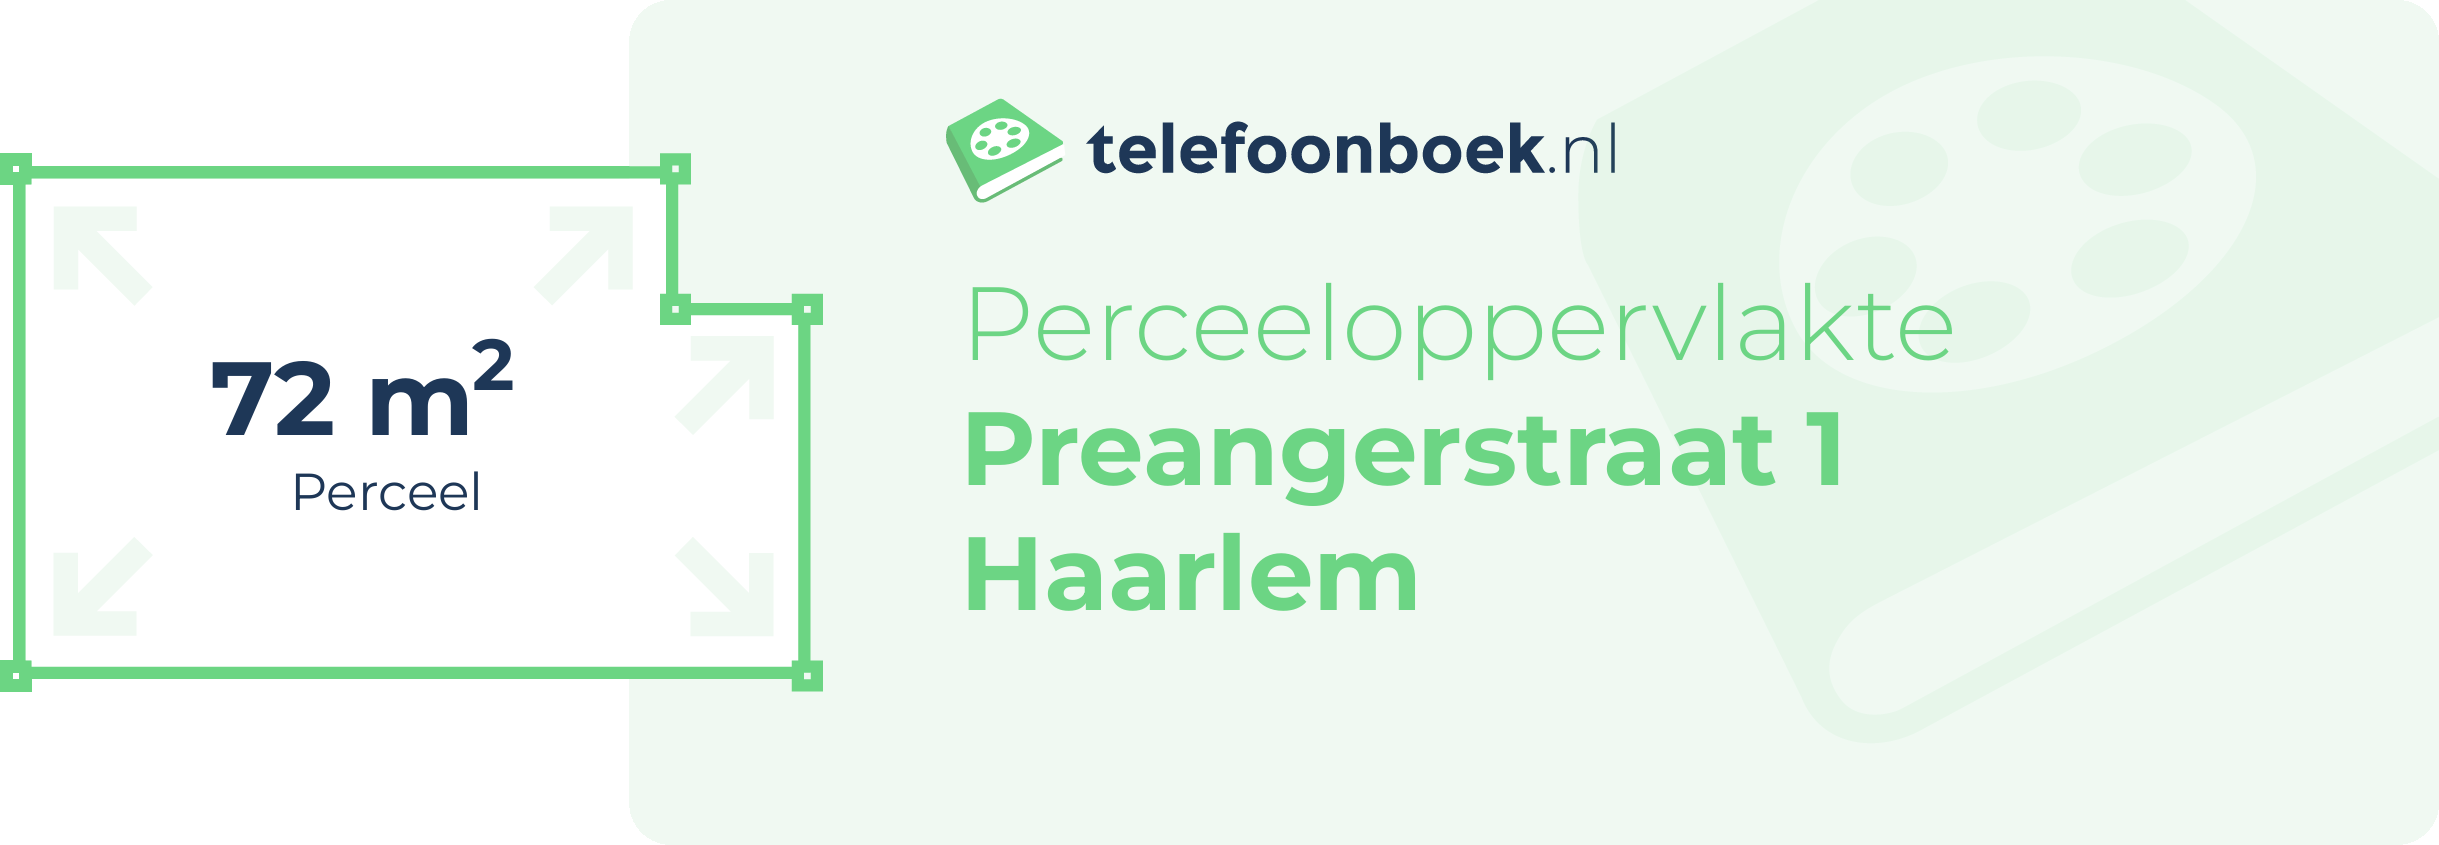 Perceeloppervlakte Preangerstraat 1 Haarlem